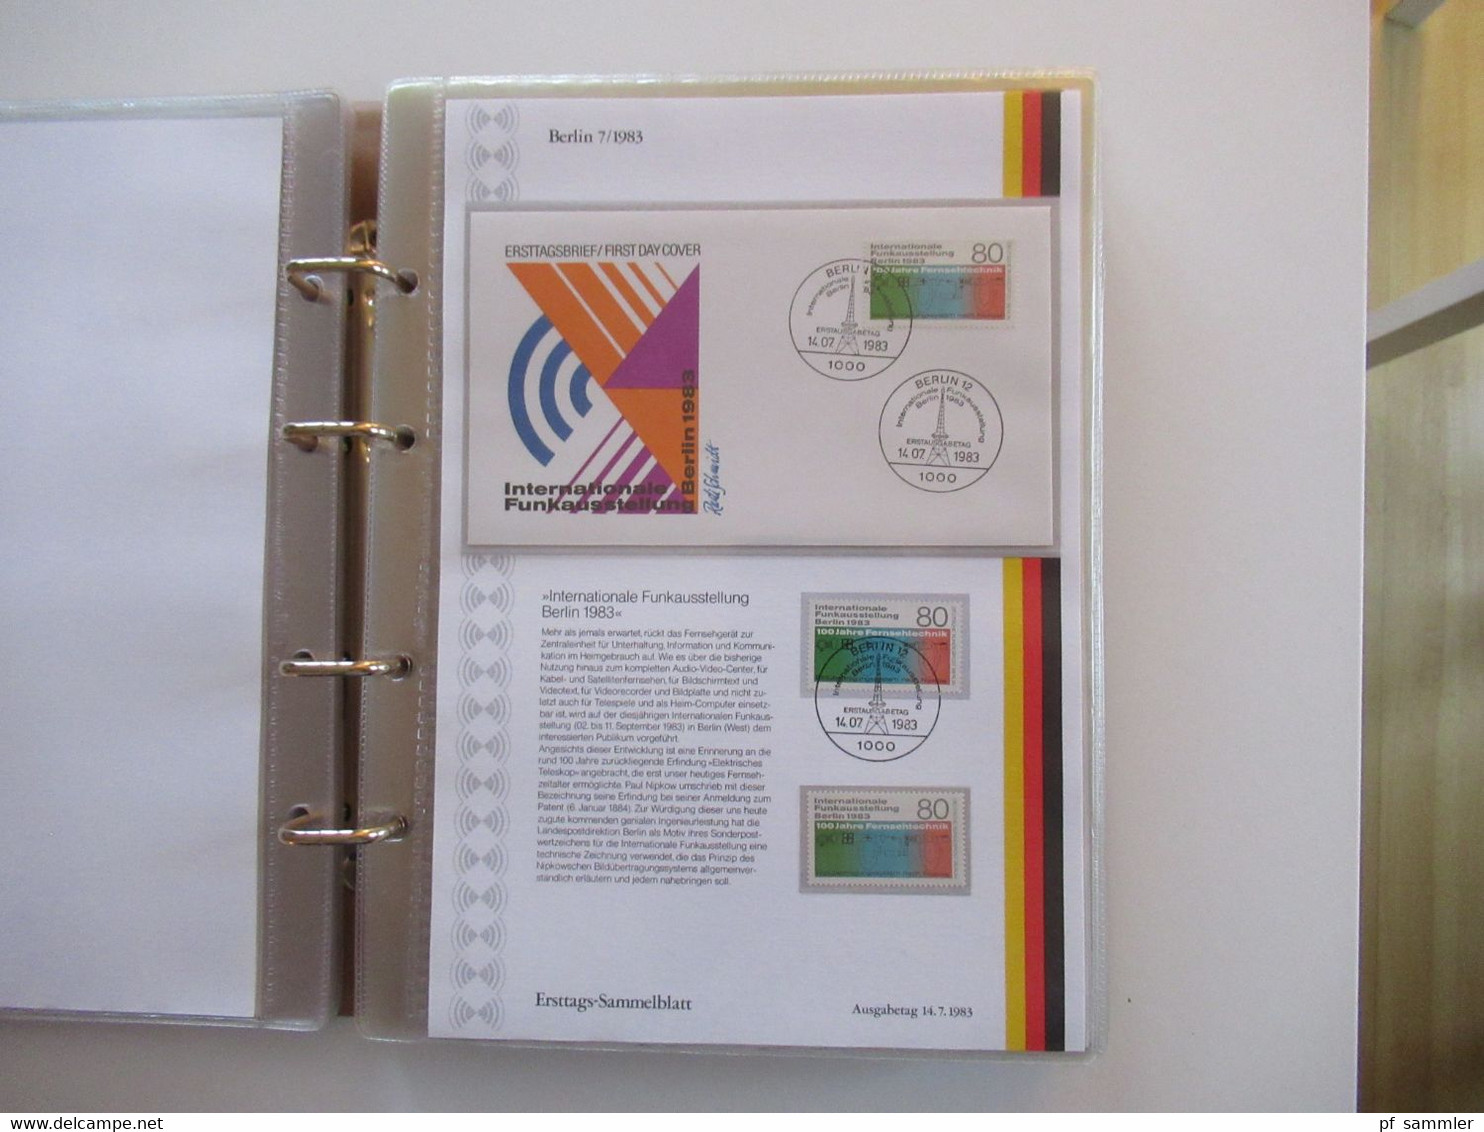 Berlin (West) 1981 - 1984 2 dicke Alben mit Ersttags Sammelblatt / 90 Erstags Sammelblätter sauber gesammelt aus dem Abo